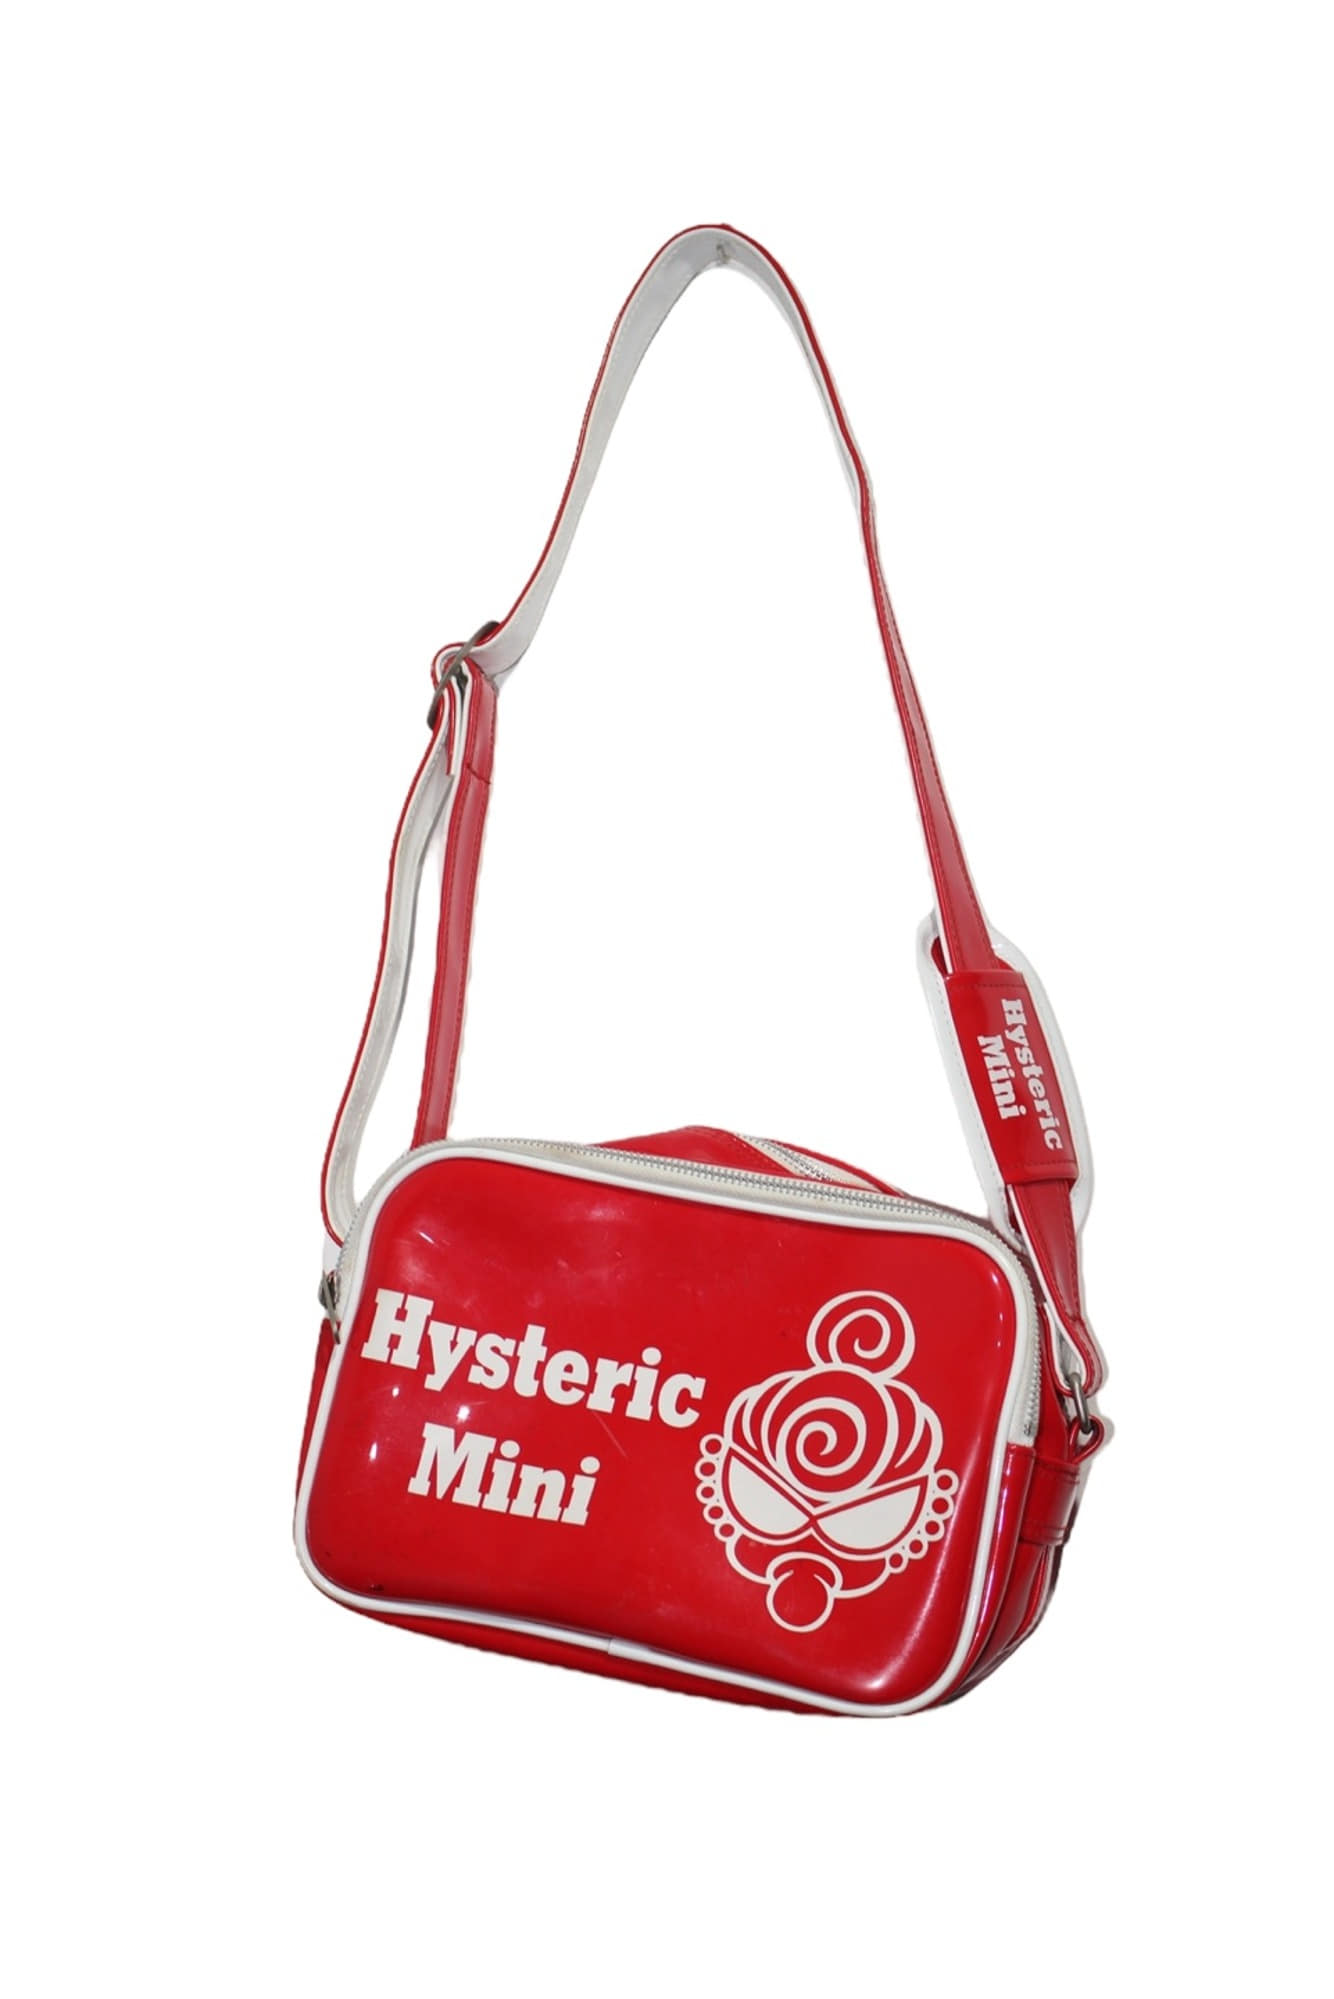 HYSTERIC MINI Acrylic Mini Cross Bag